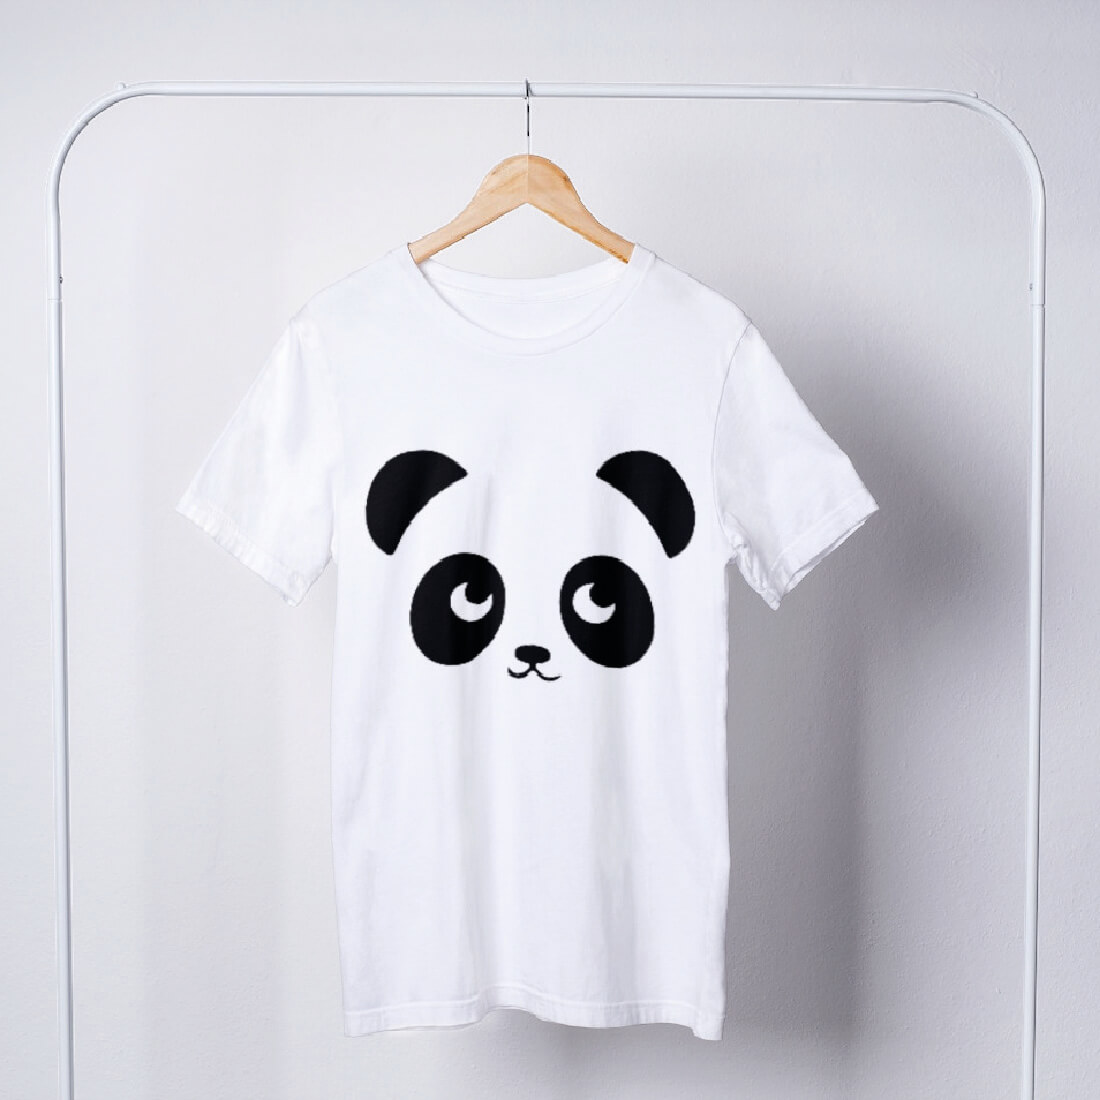 T-shirt Panda Face Design Graphics preview image.